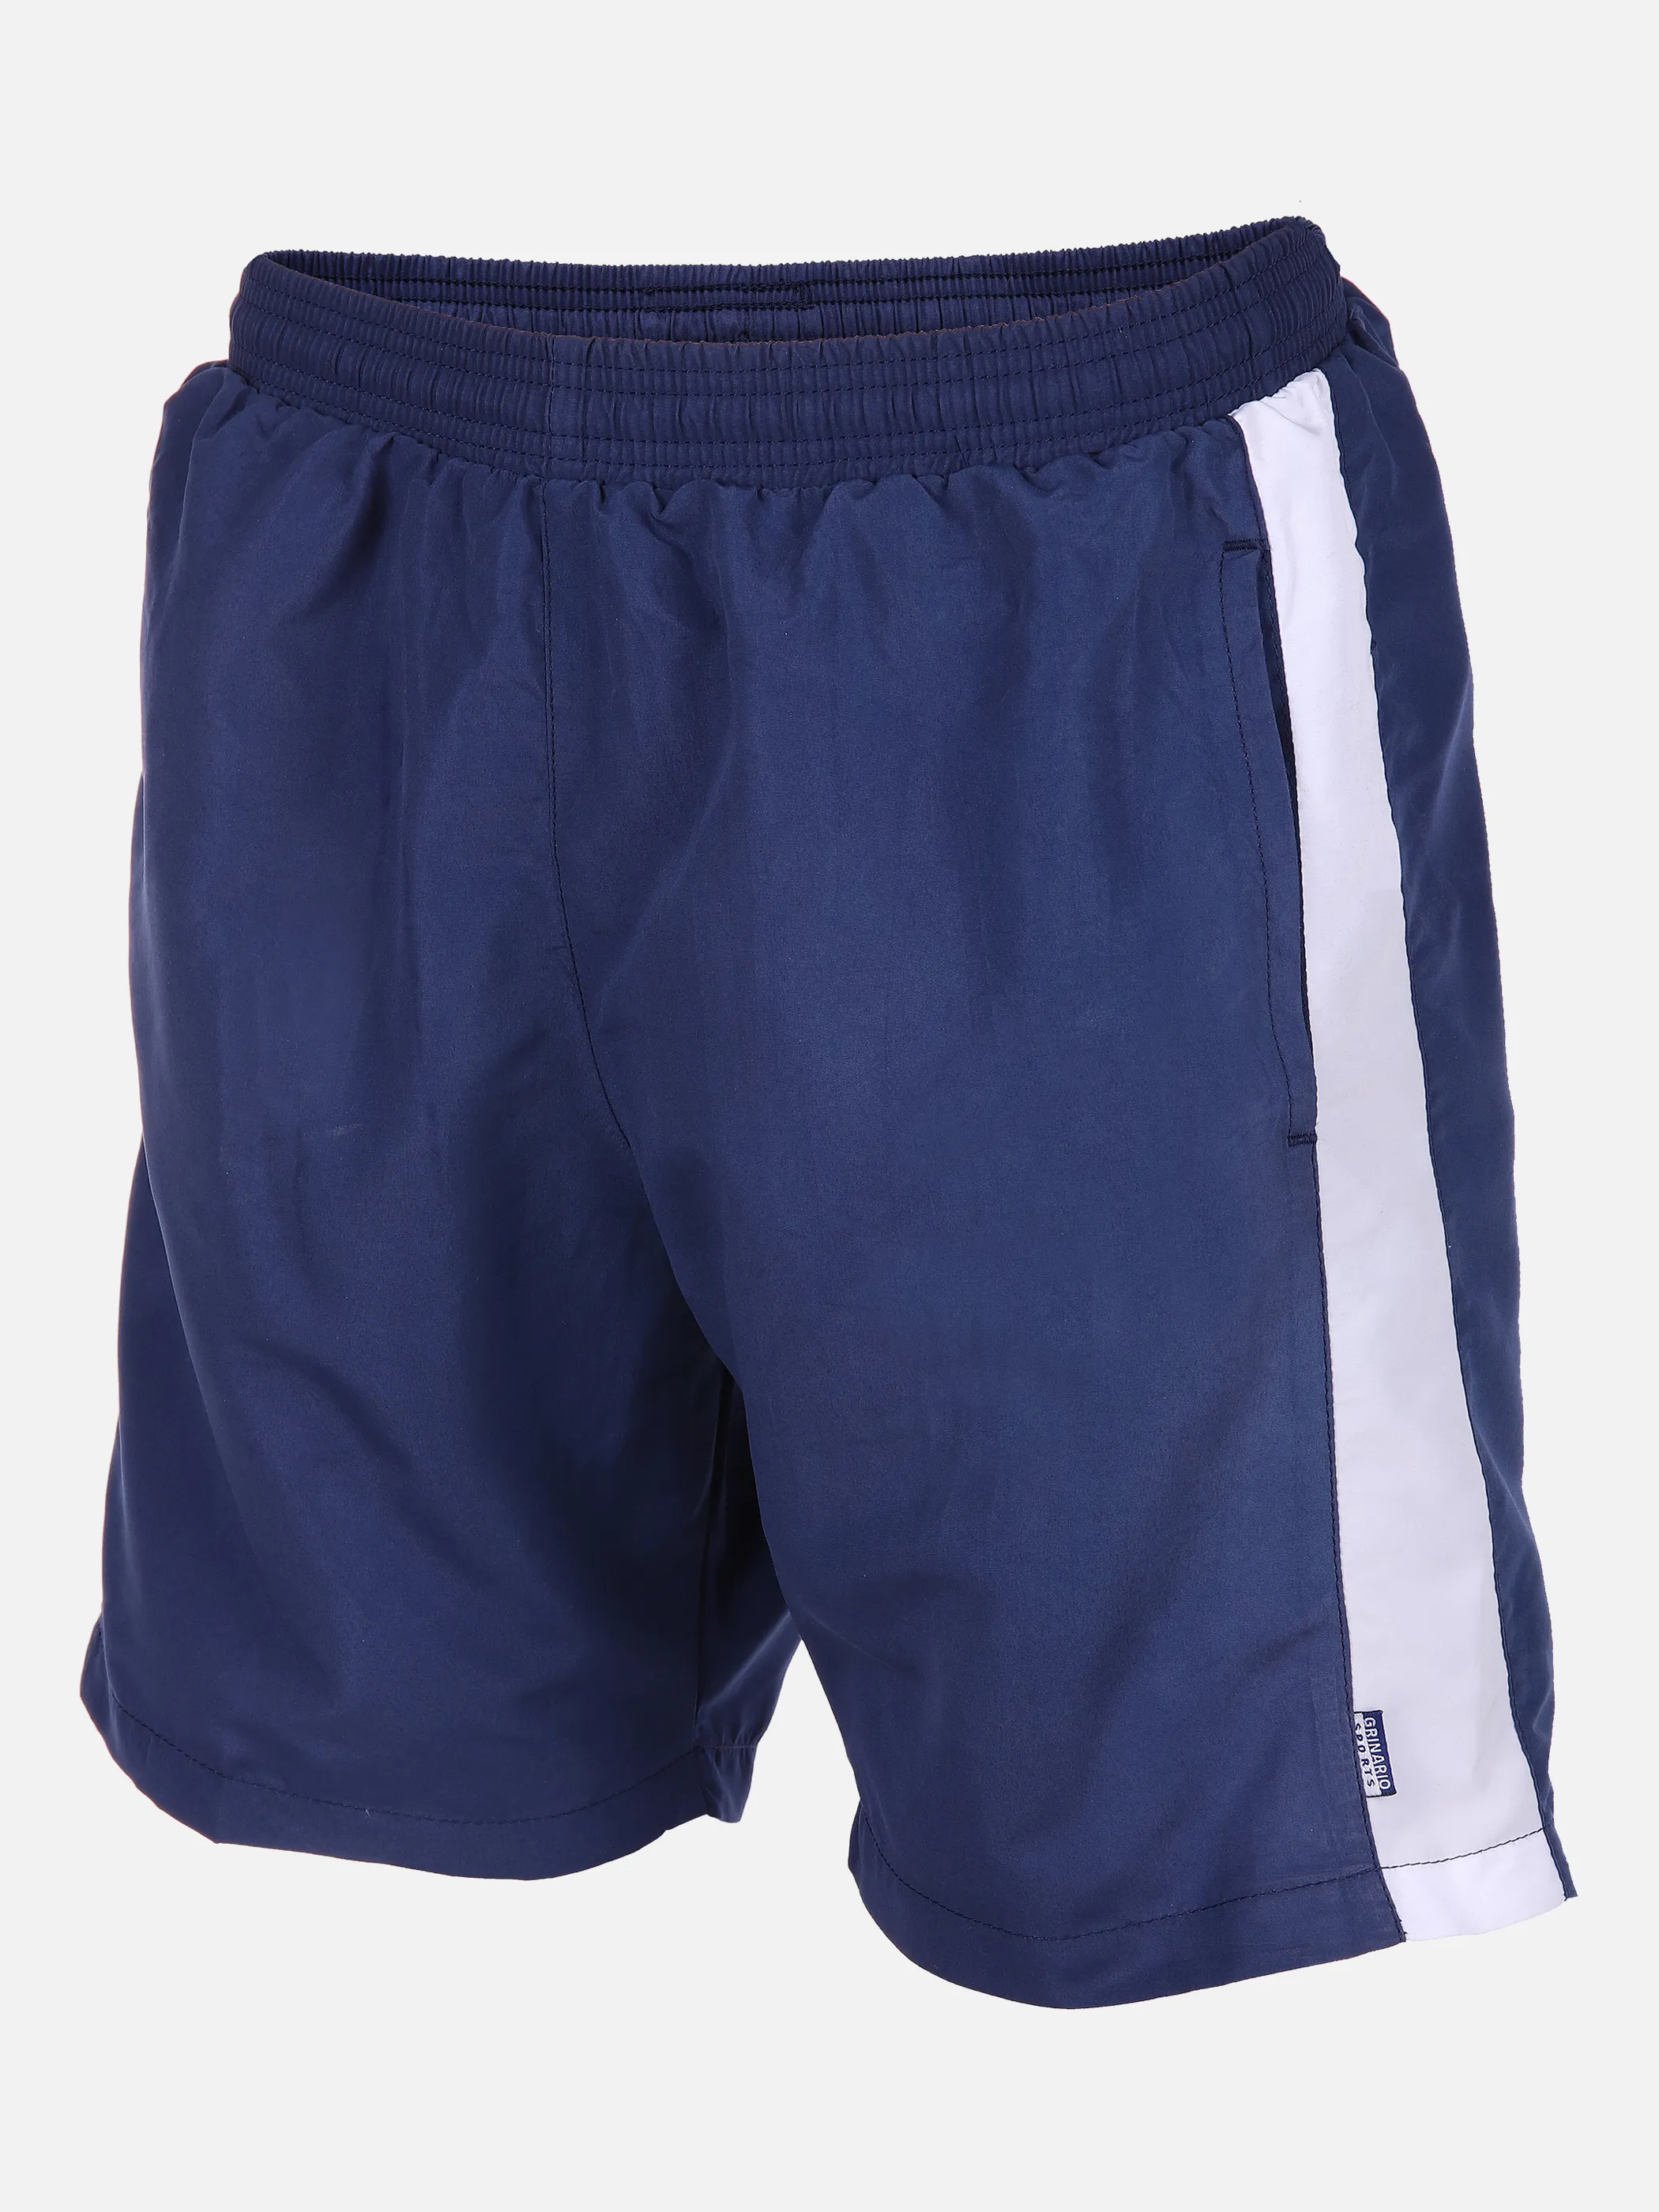 Grinario Sports He-Short Blau 839804 NAVY/WHITE 1